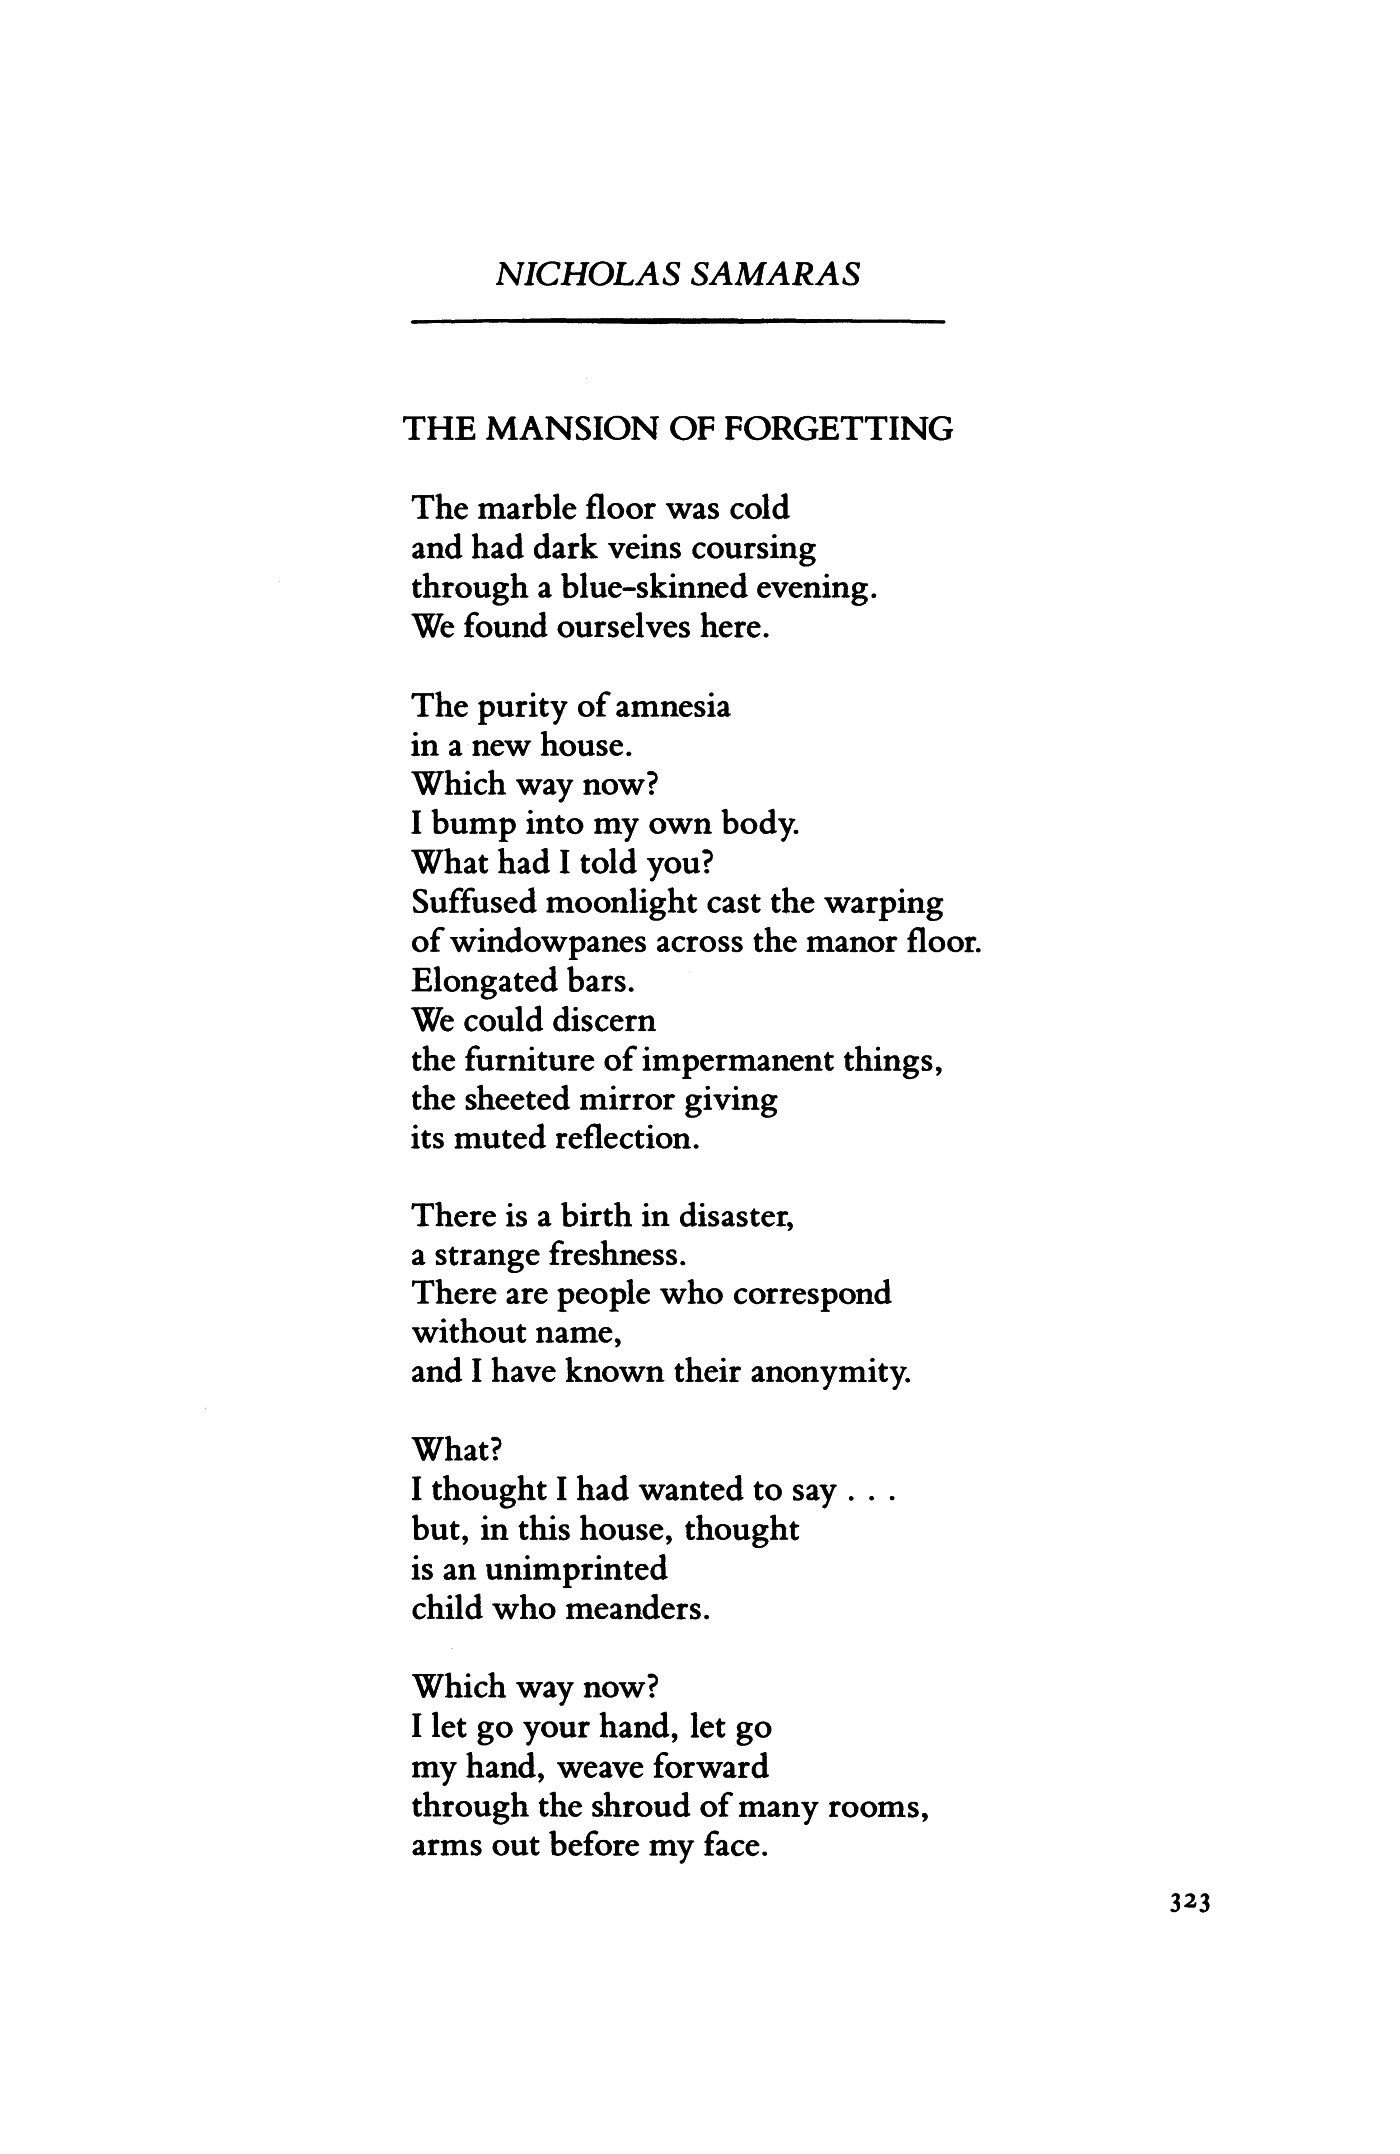 forgetfulness poem